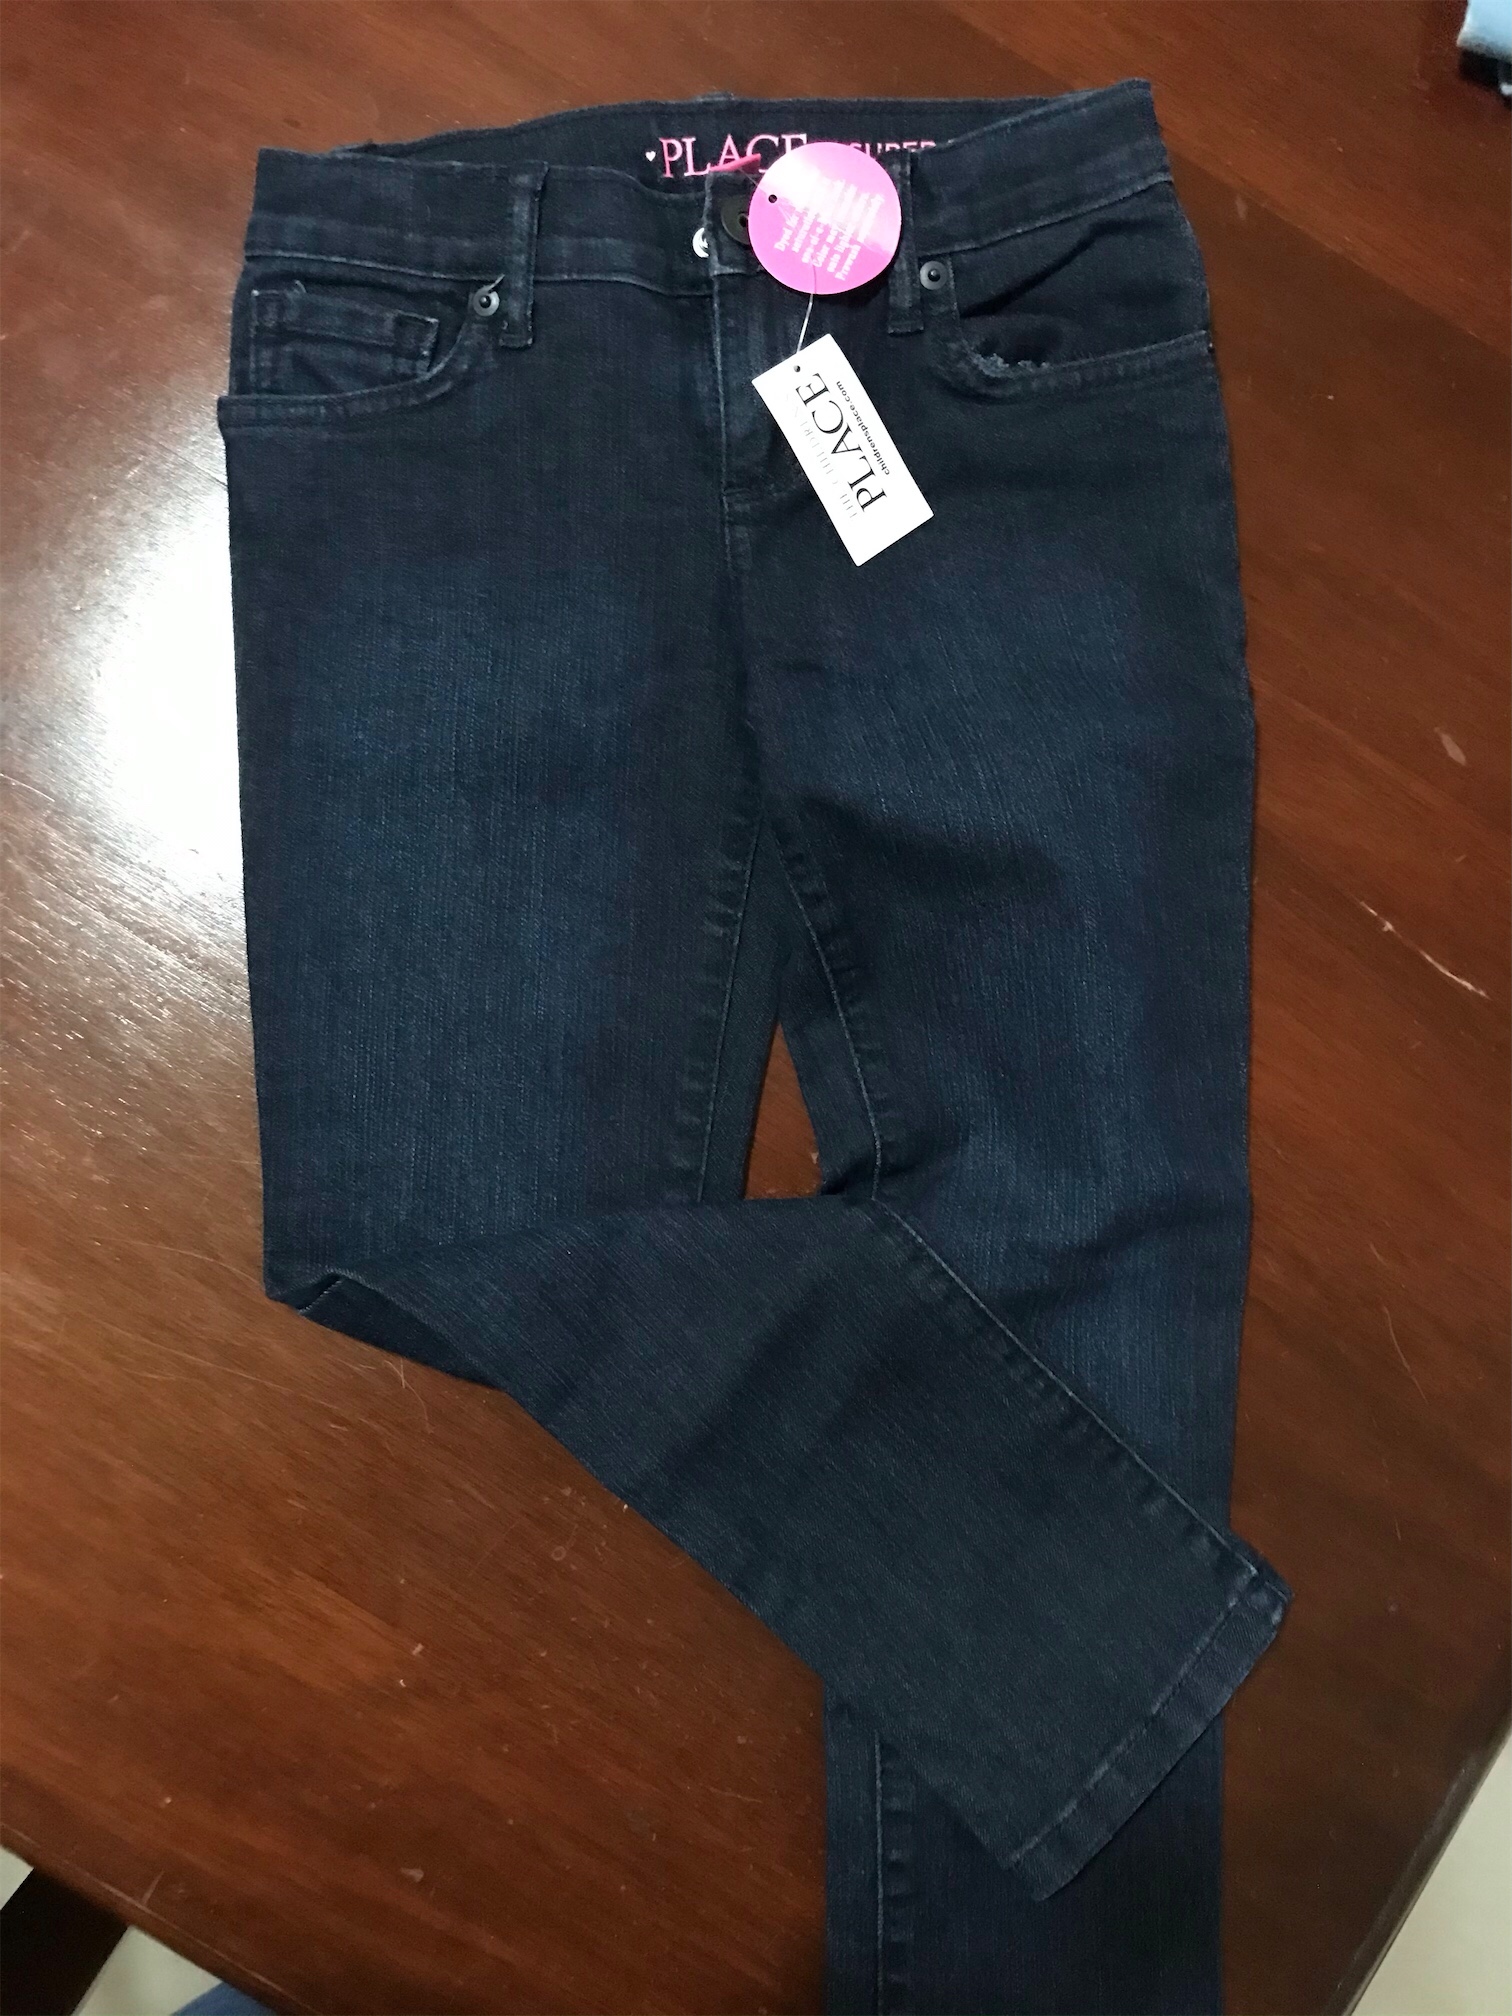 ropa y zapatos - Jeans Children’s Place size 6  
$600 nuevo
$400 usado 